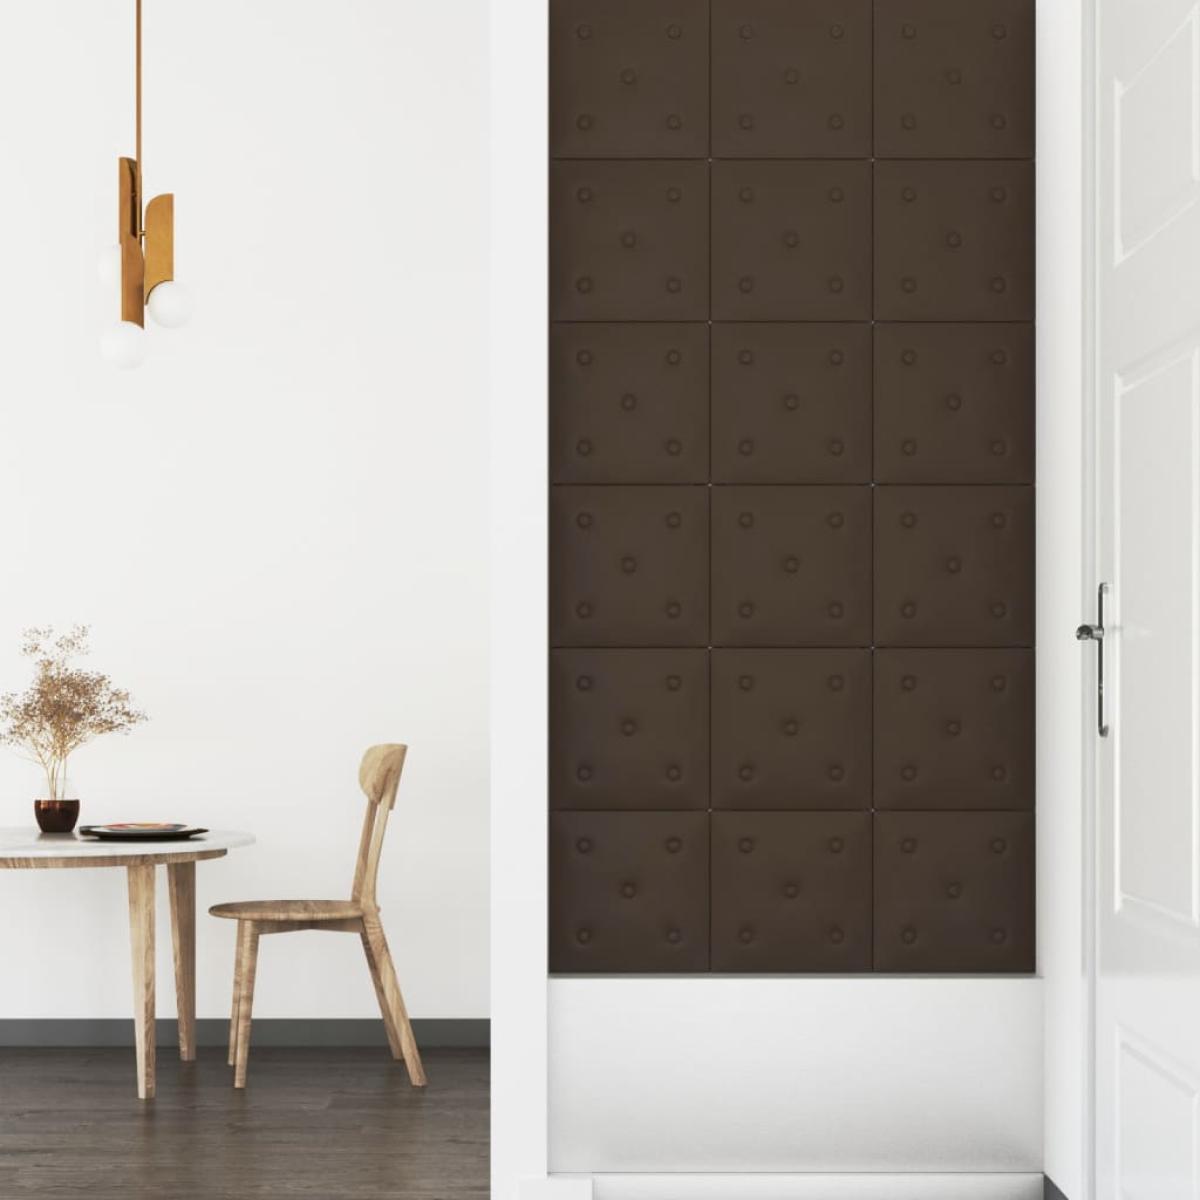 Paneles de pared 12 uds cuero sintético marrón 30x30 cm 1,08 m²